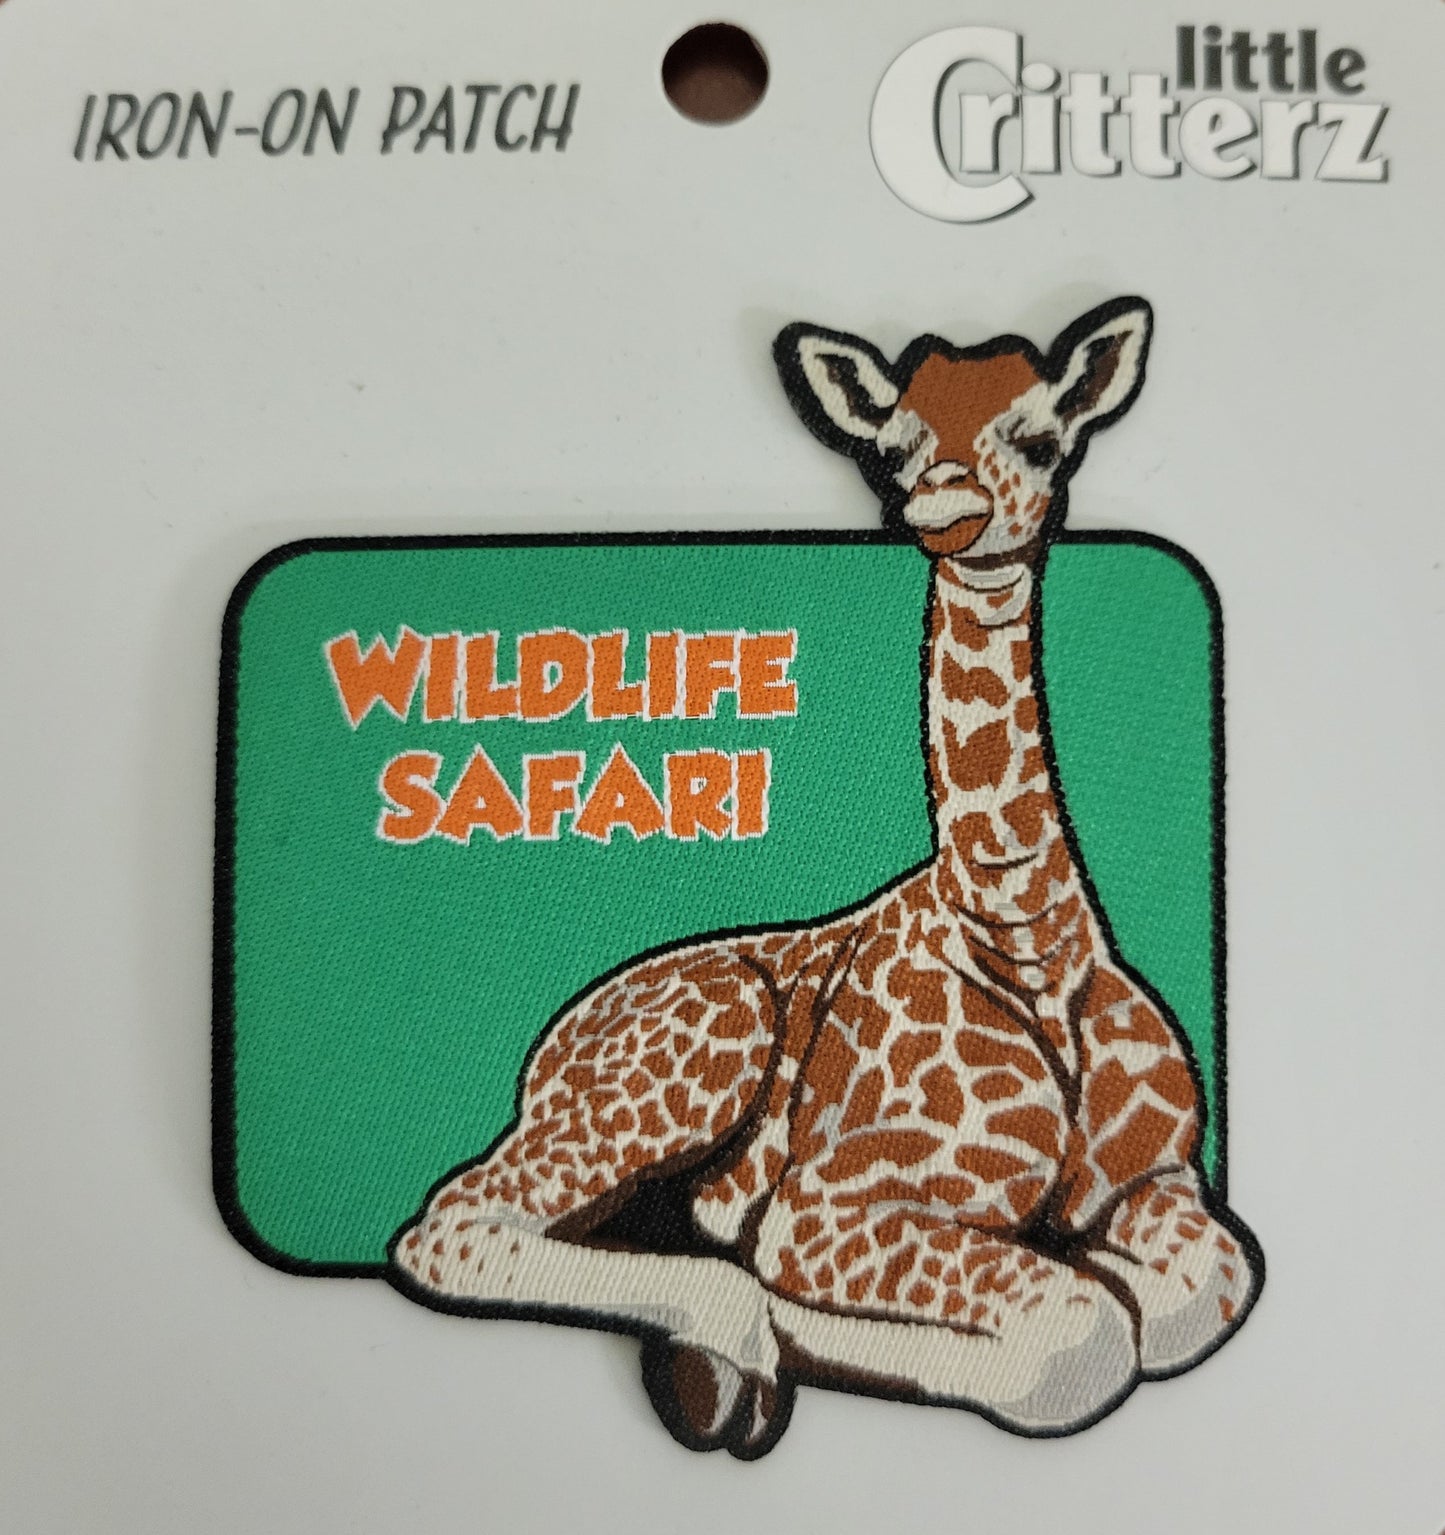 Iron-On Patch - Giraffe